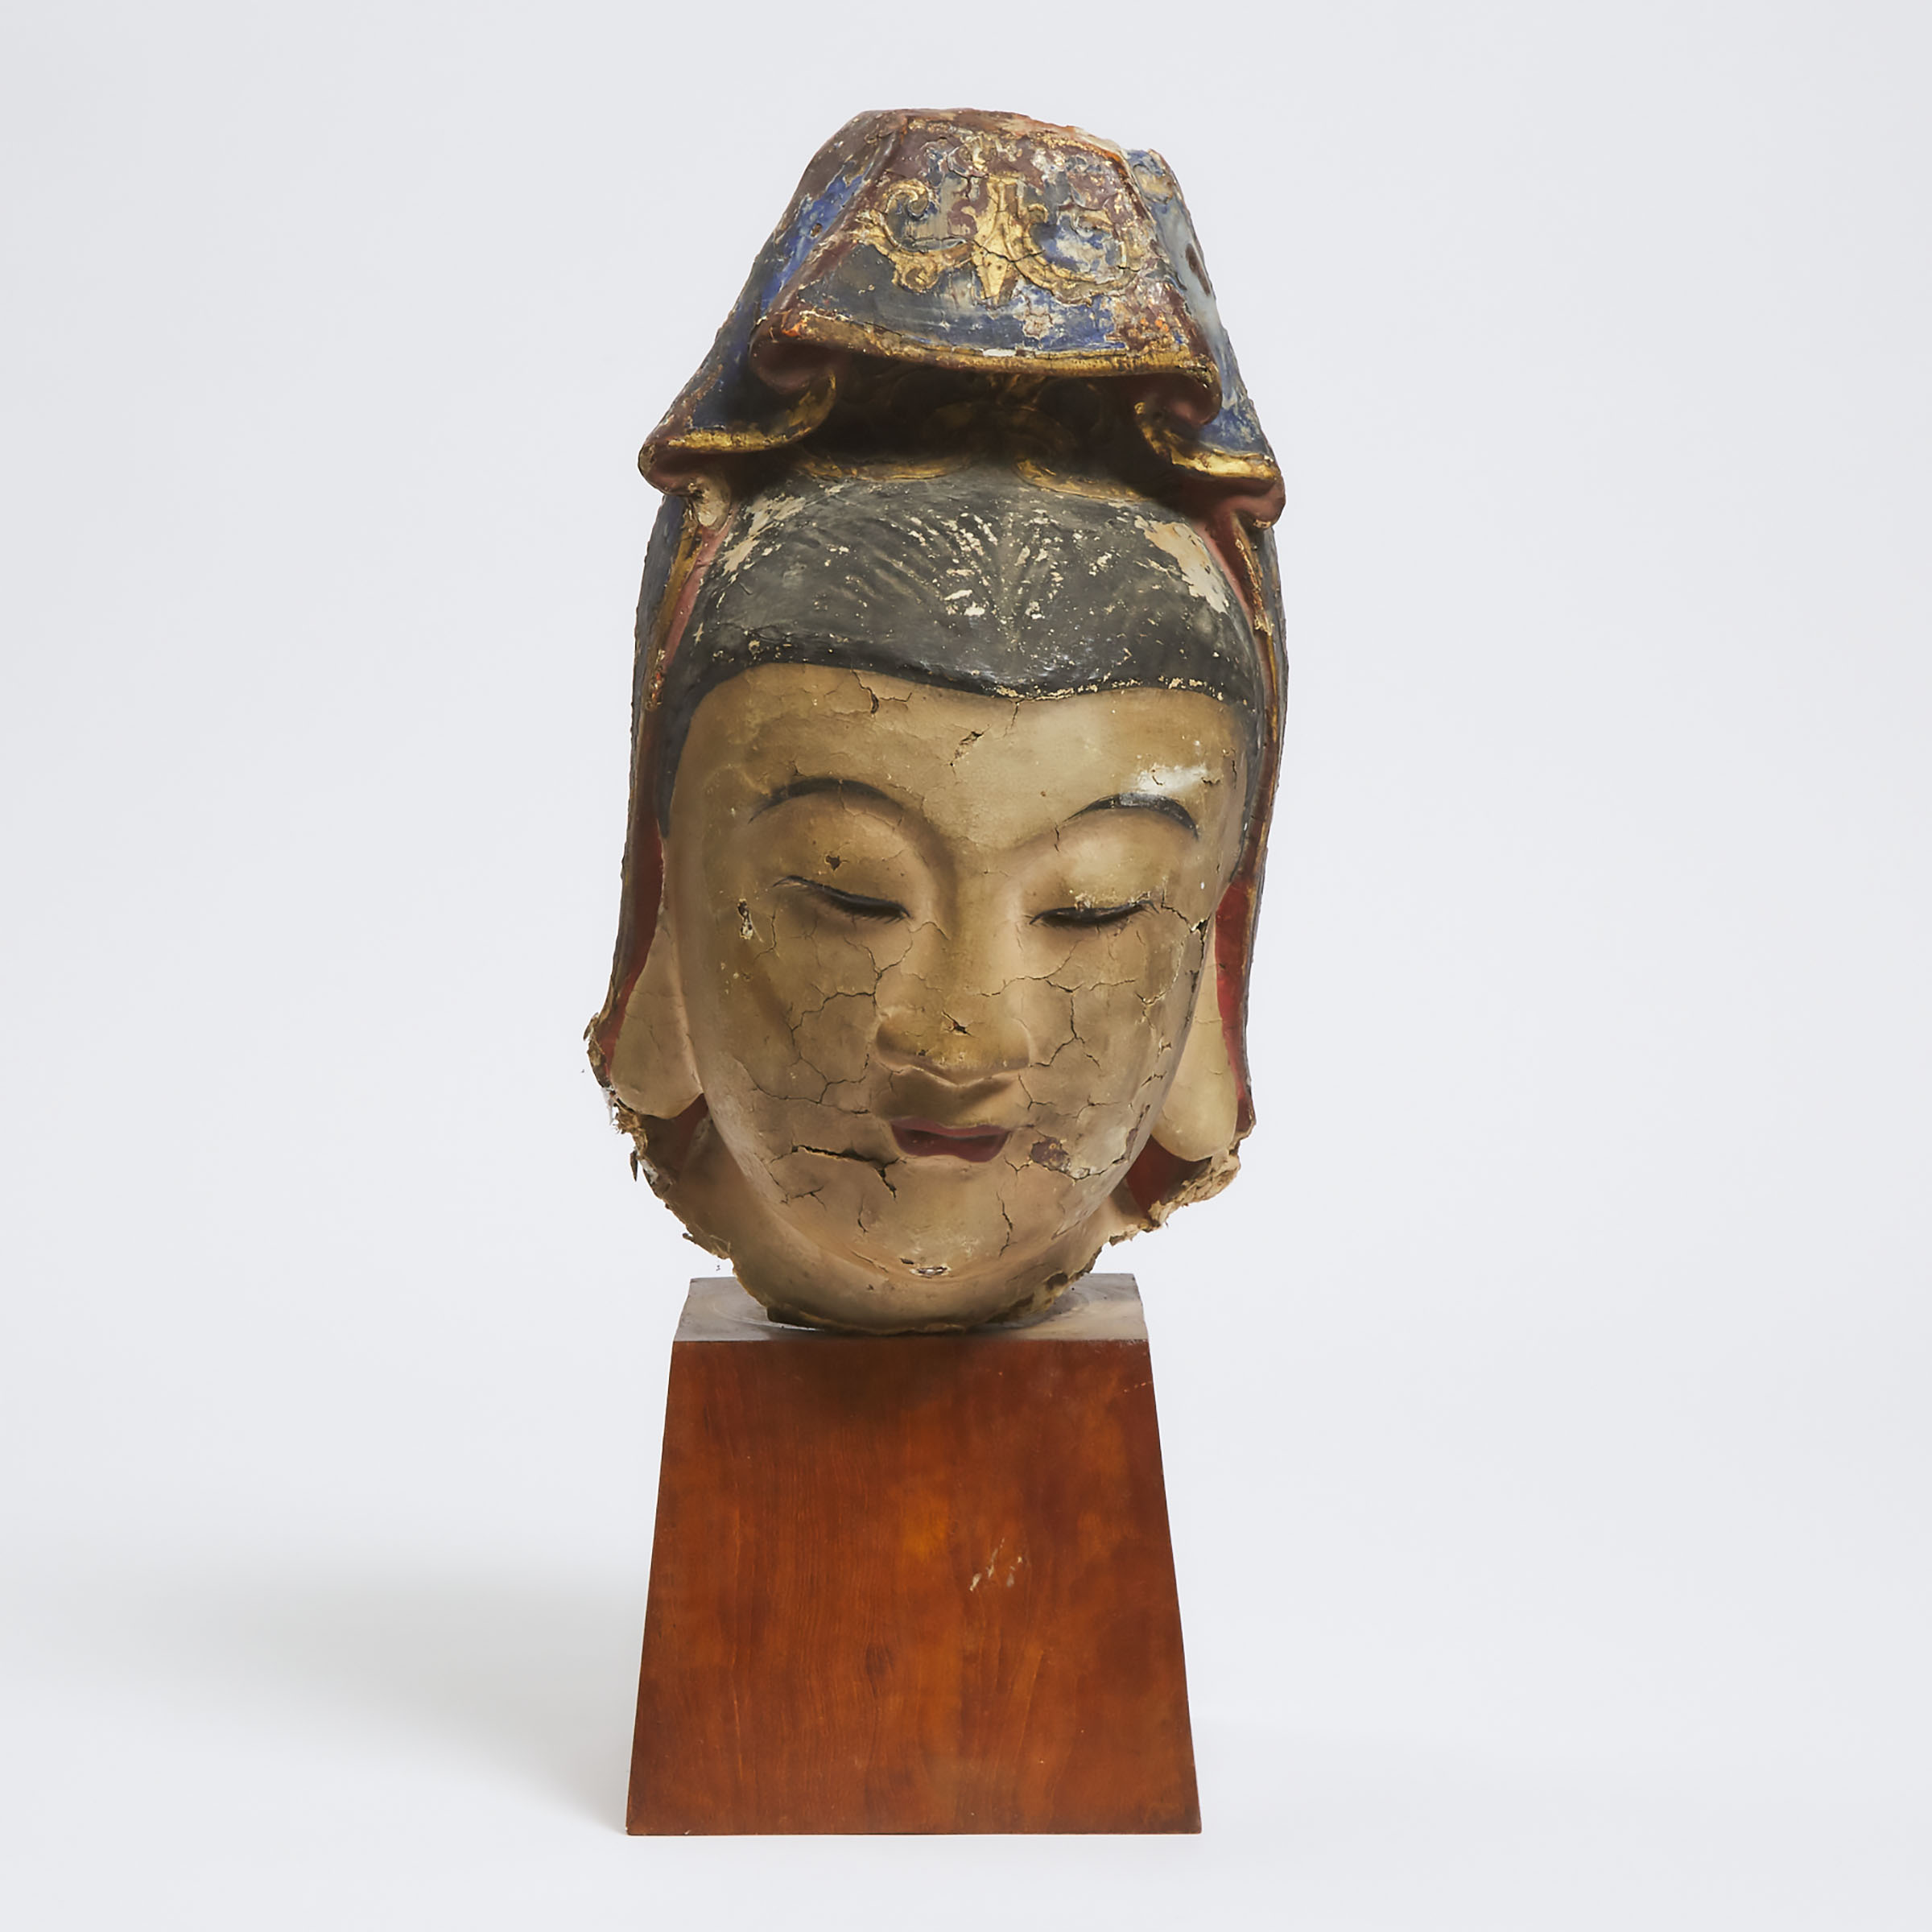 A Large Polychrome Painted Stucco Head of Guanyin (Avalokiteshvara), 18th Century